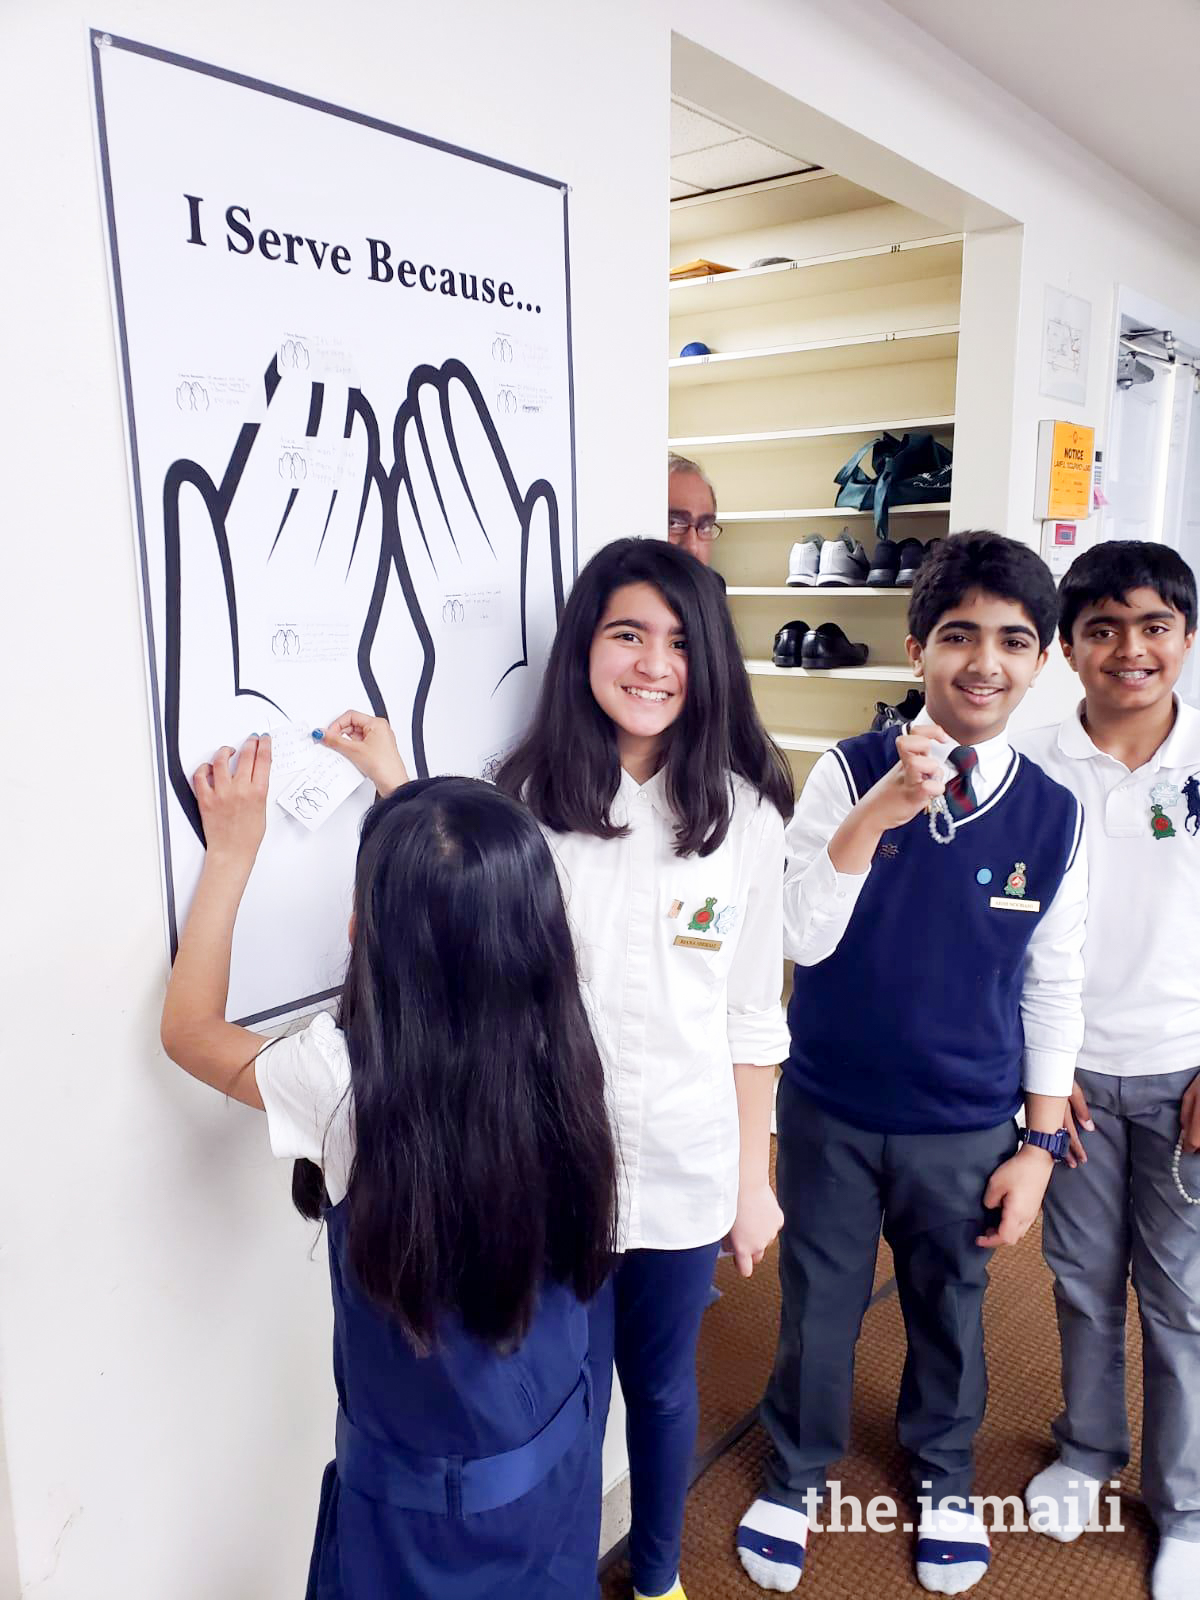 Students at Edison Jamatkhana reflect on why they serve.